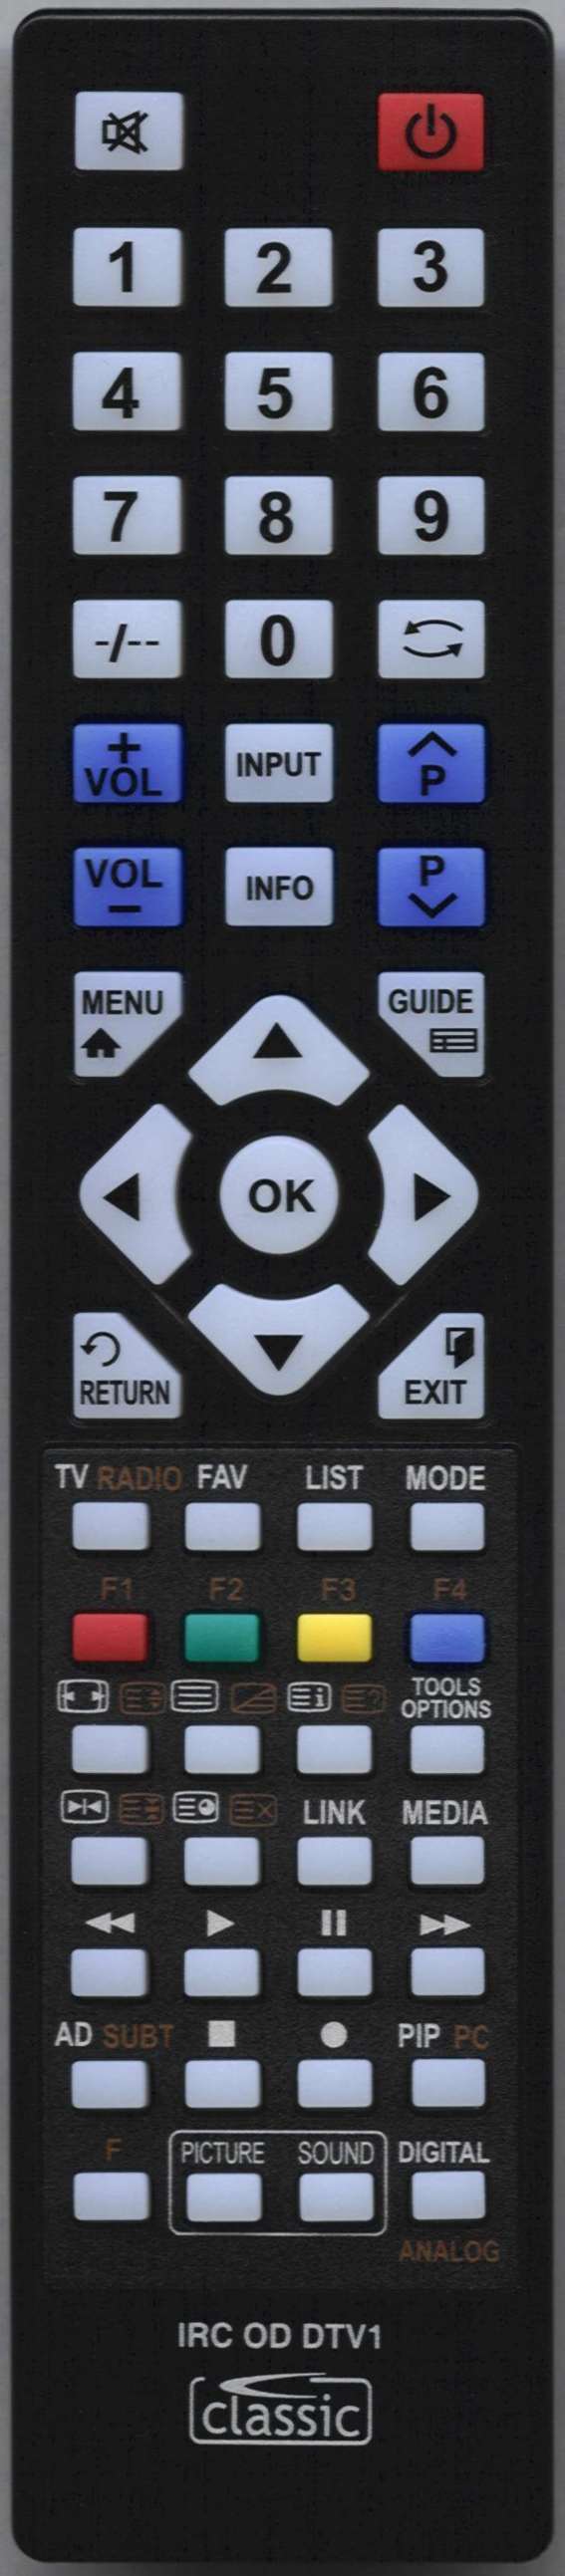 SONY RMT-TX100D Remote Control Alternative 